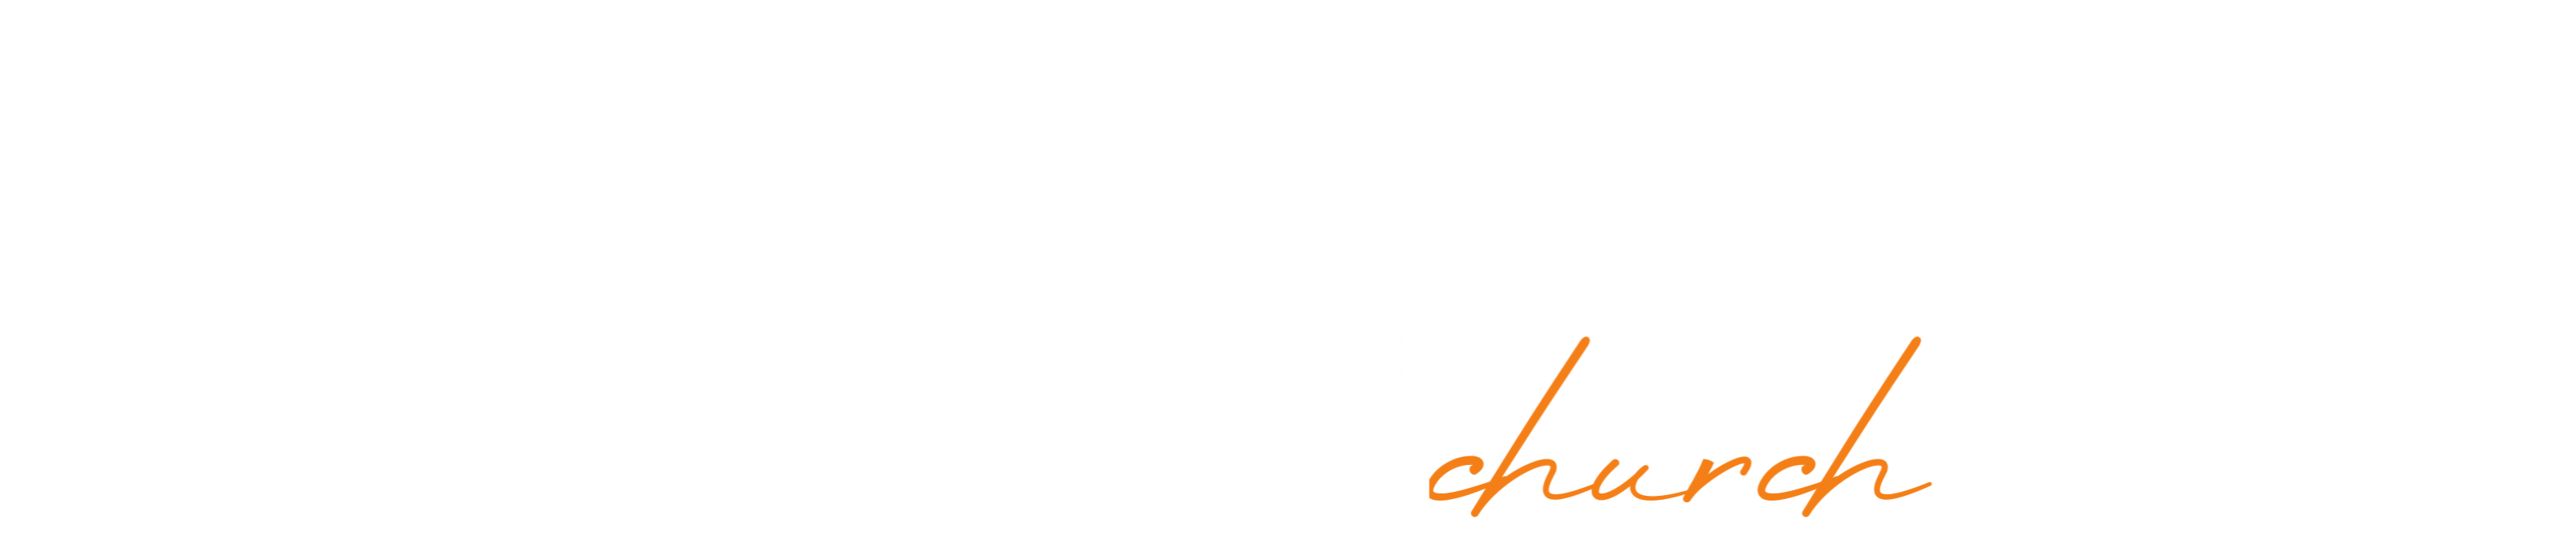 Good Things Christian Church